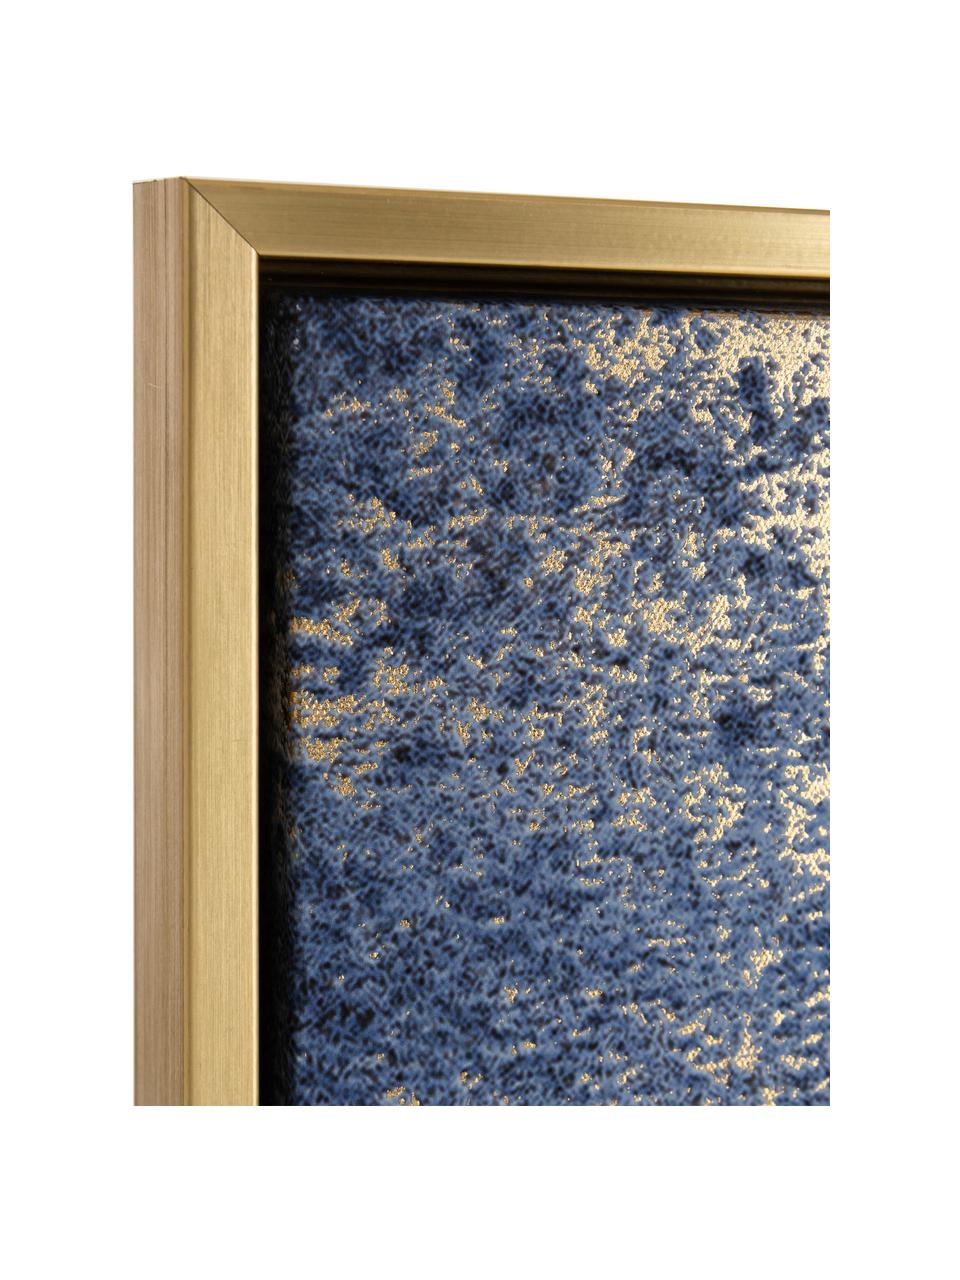 Leinwanddruck Strokes, Rahmen: Kiefernholz, Kunststoff, , Bild: Leinwand, Blau, Weiß, Goldfarben, 103 x 143 cm